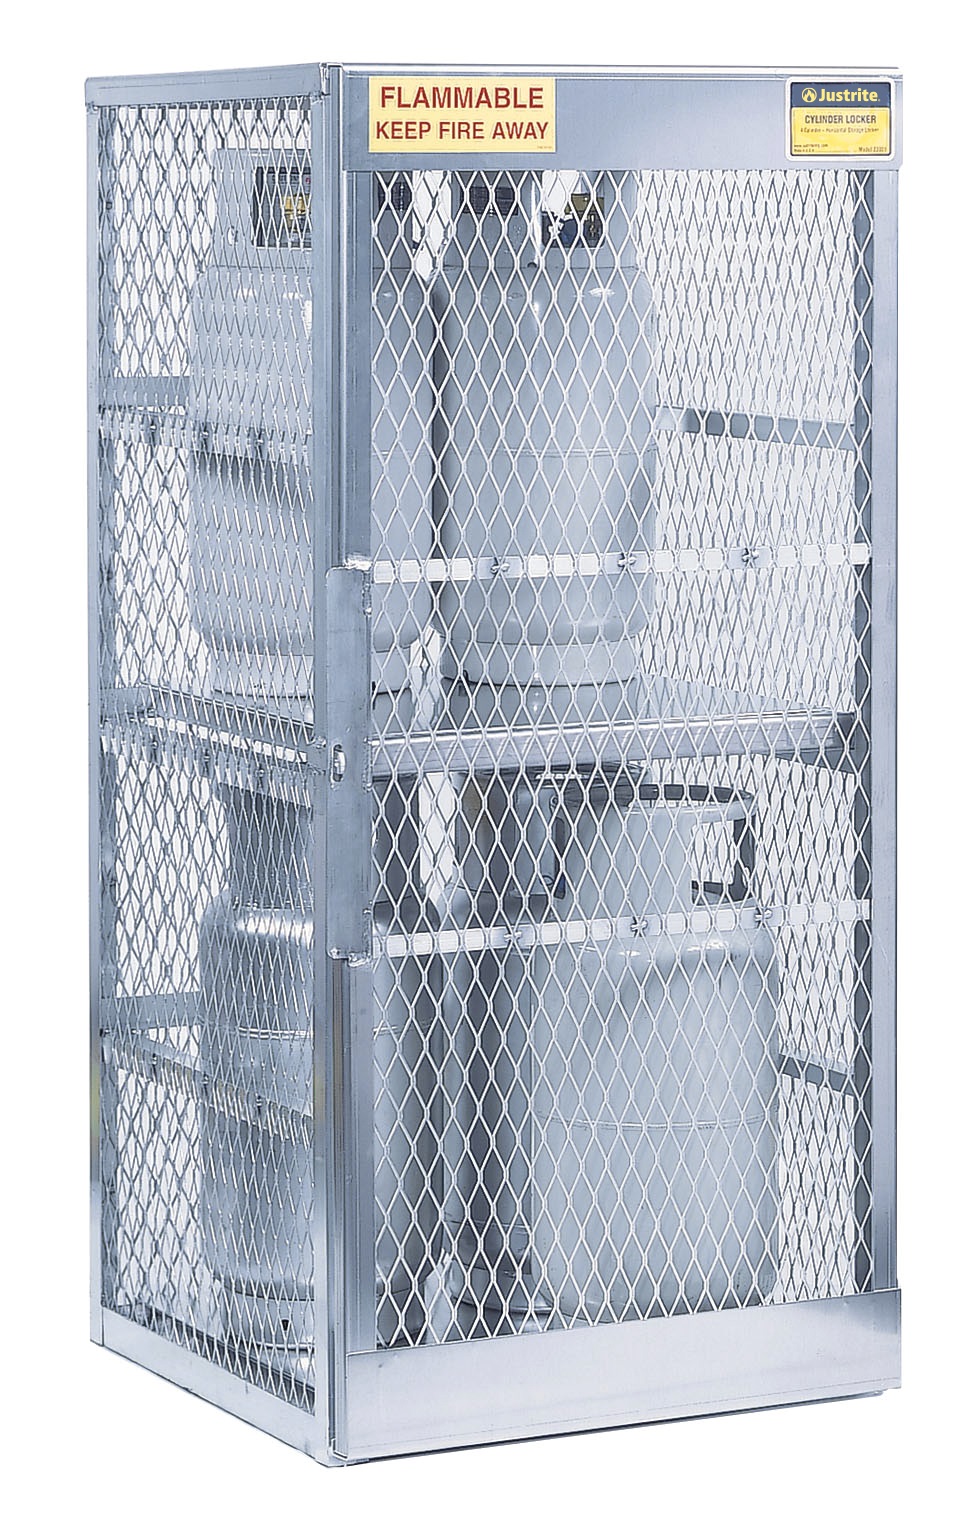 Justrite Aluminum Cylinder Lockers LPG - Safety Lockers